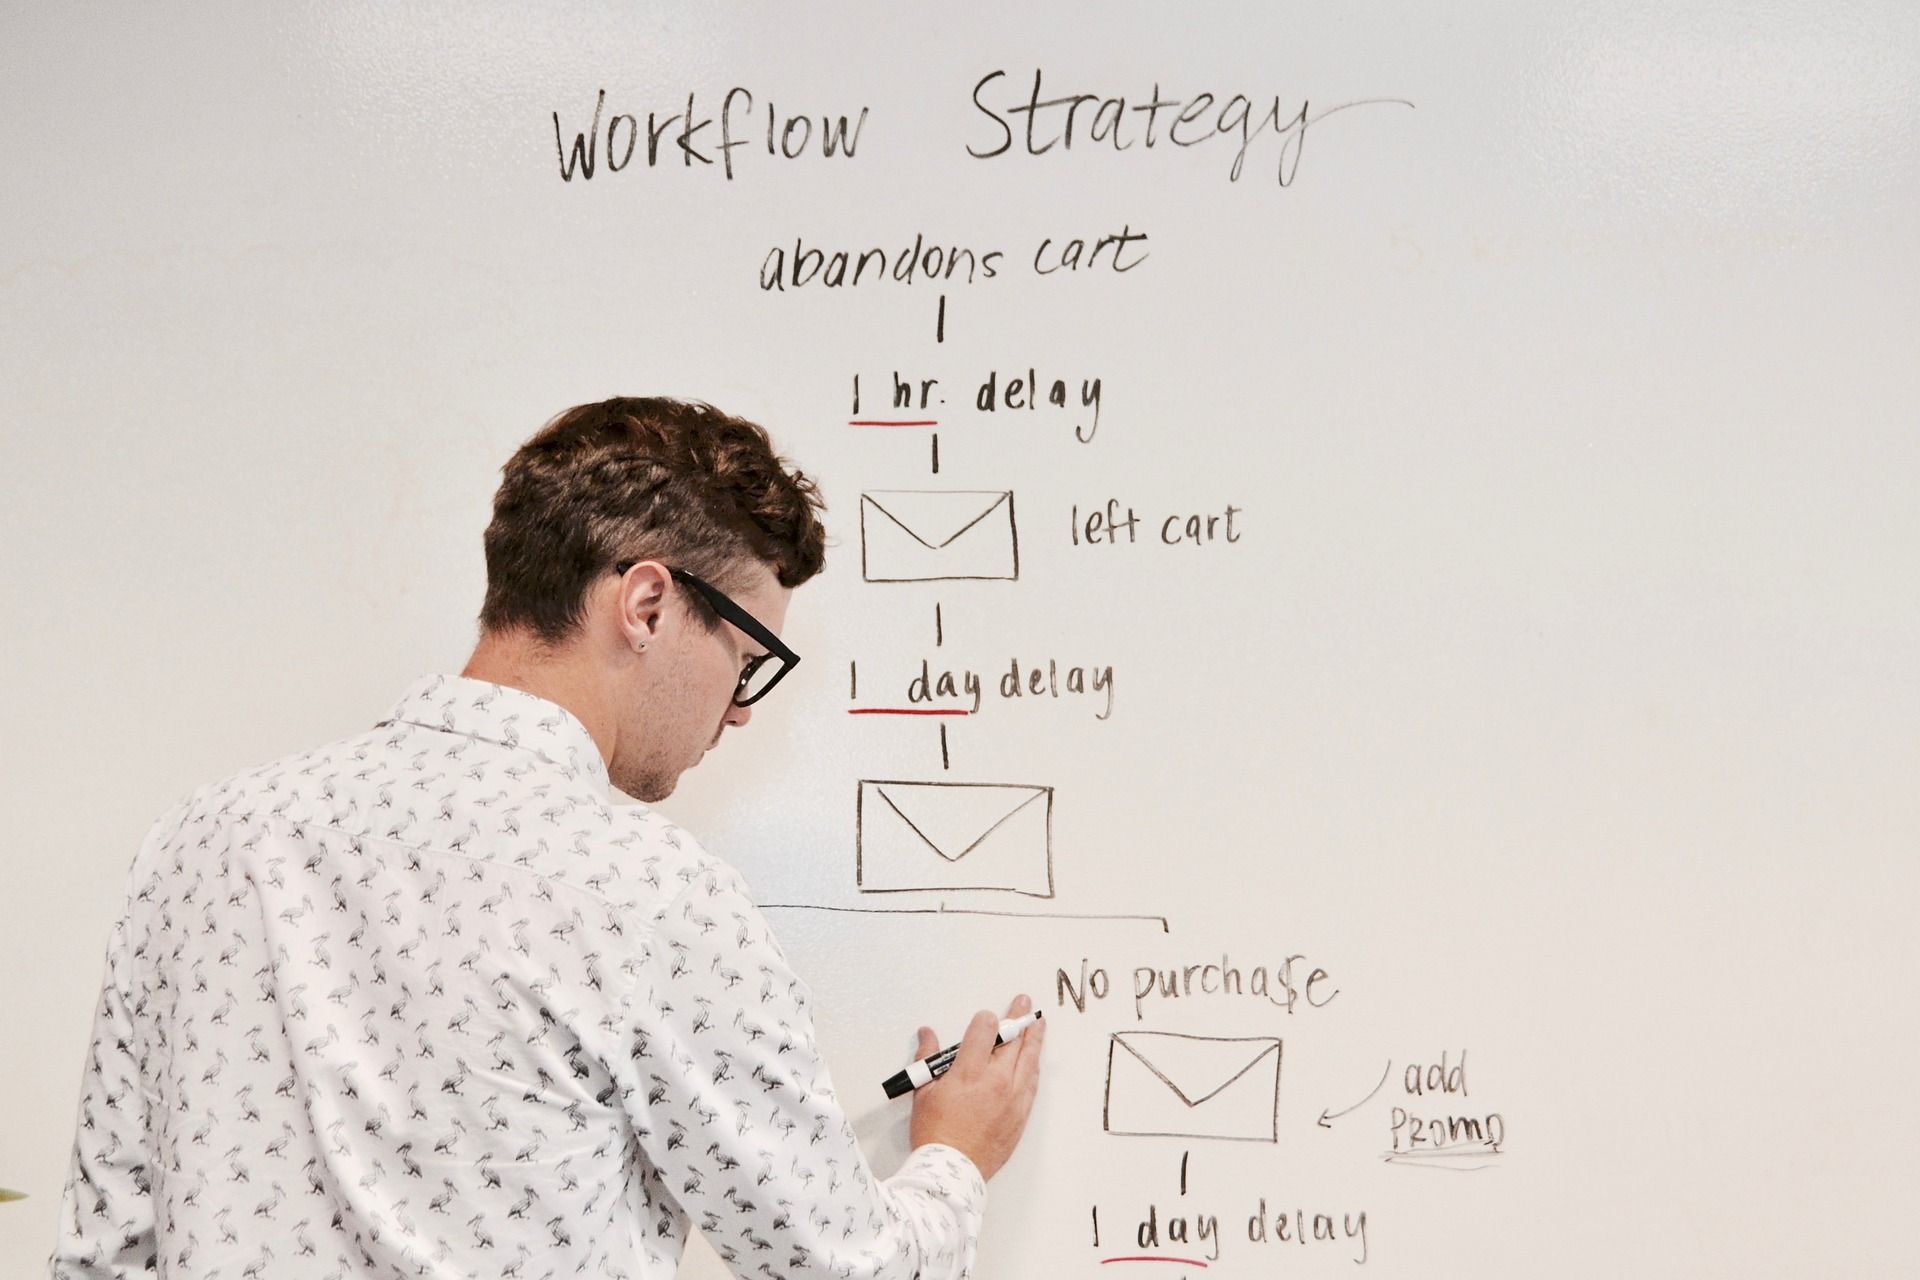 Man writing workflow chart on whiteboard